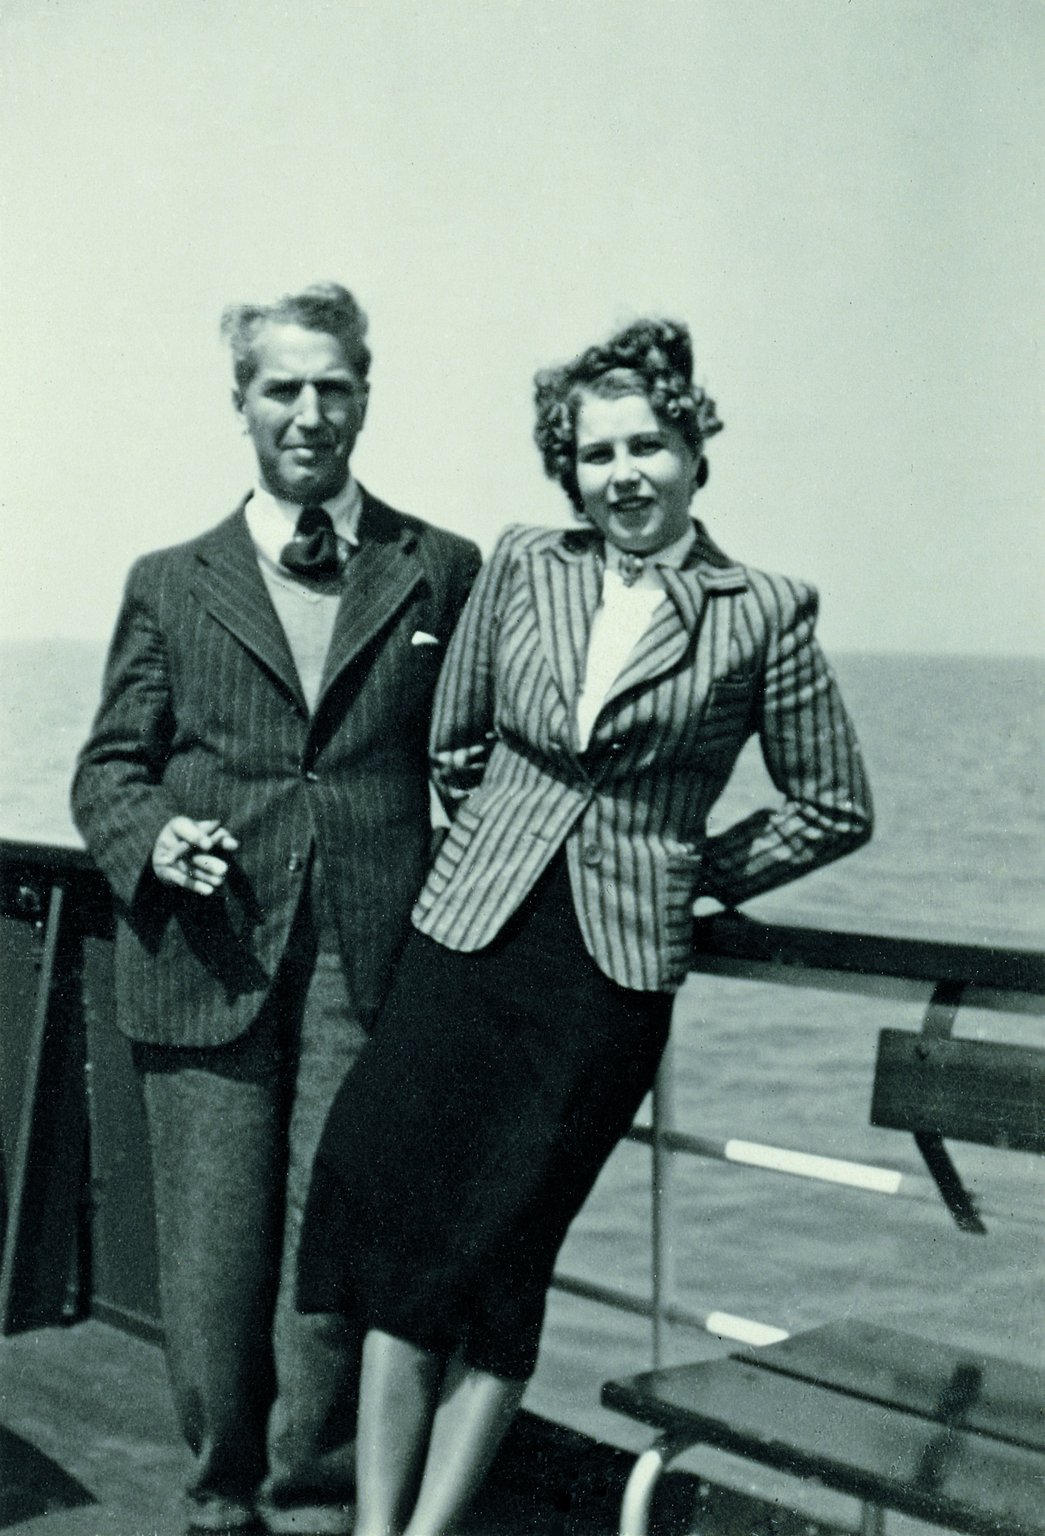 Fritz Pfeffer with his fiancée Charlotte Kaletta, around 1940.